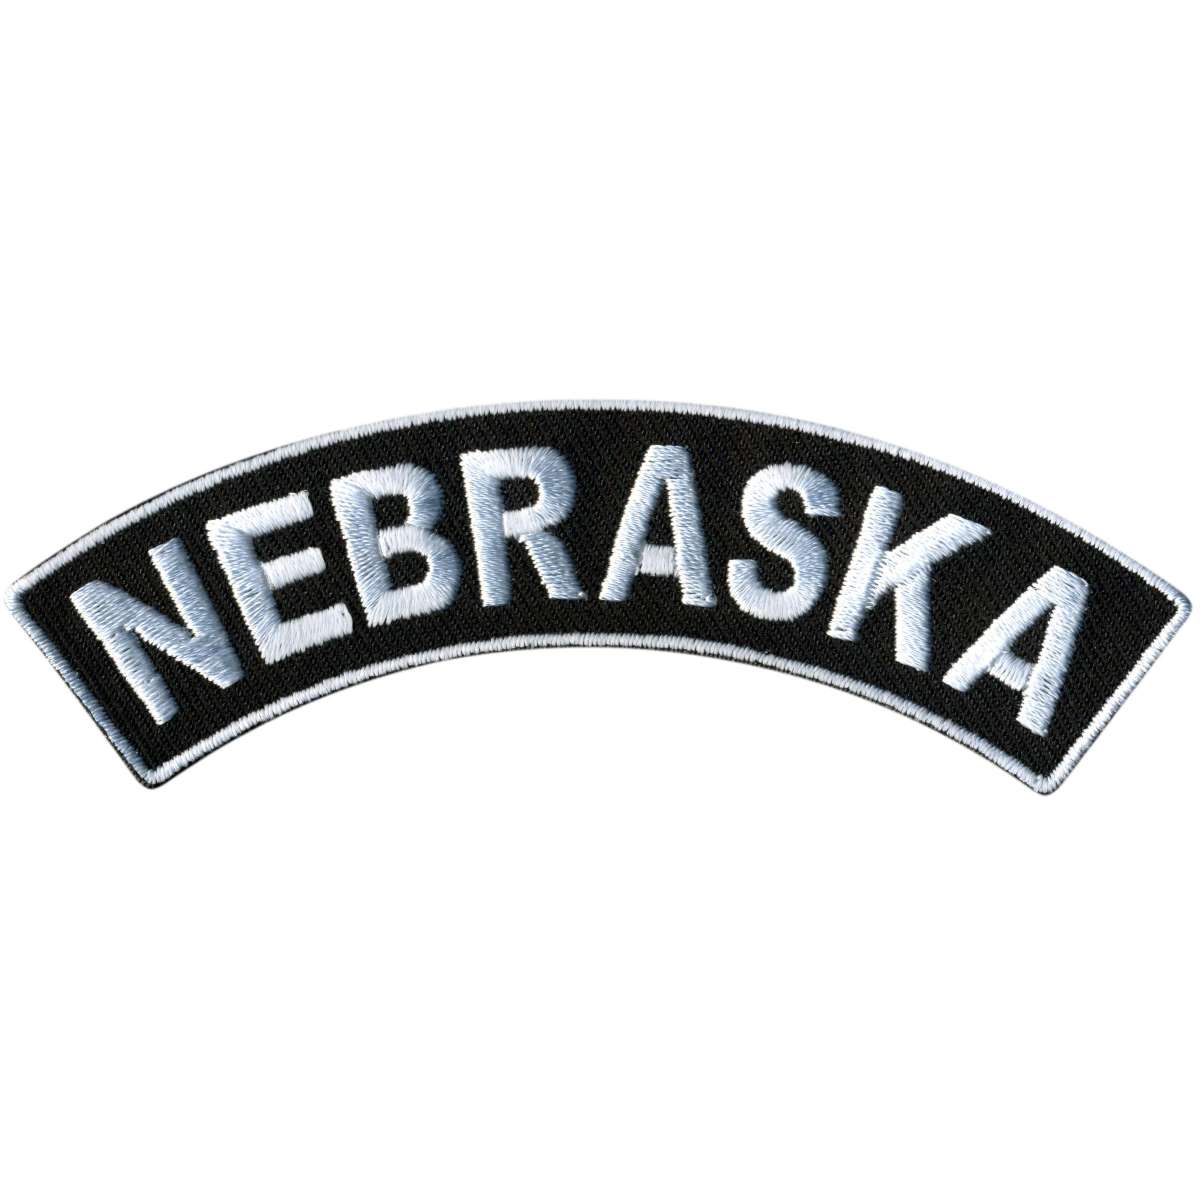 Hot Leathers Nebraska  4" X 1" Top Rocker Patch PPM4054